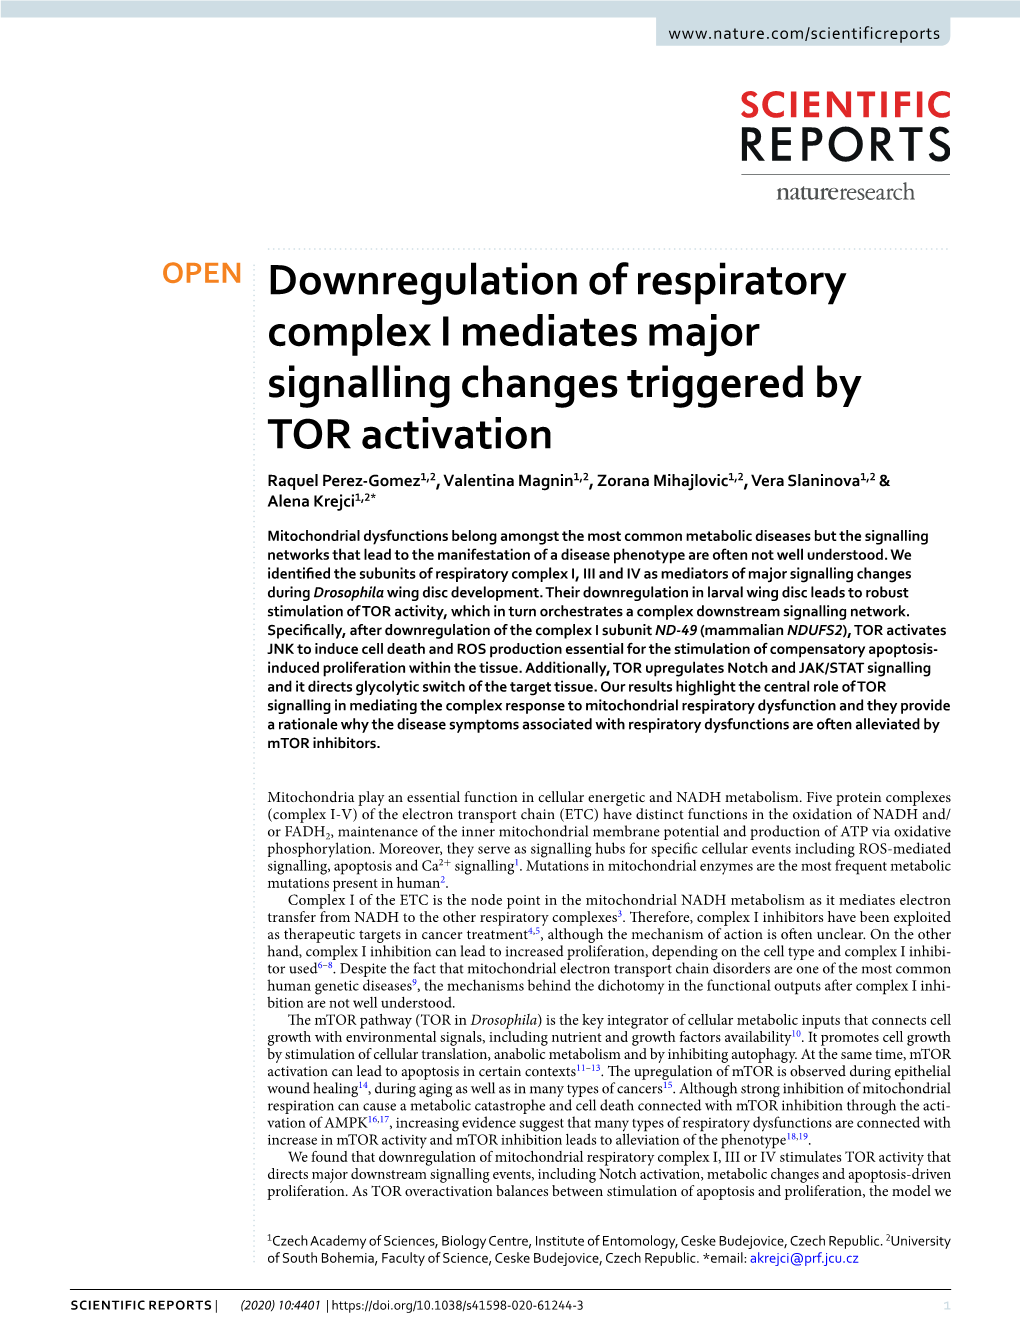 Downregulation of Respiratory Complex I Mediates Major Signalling